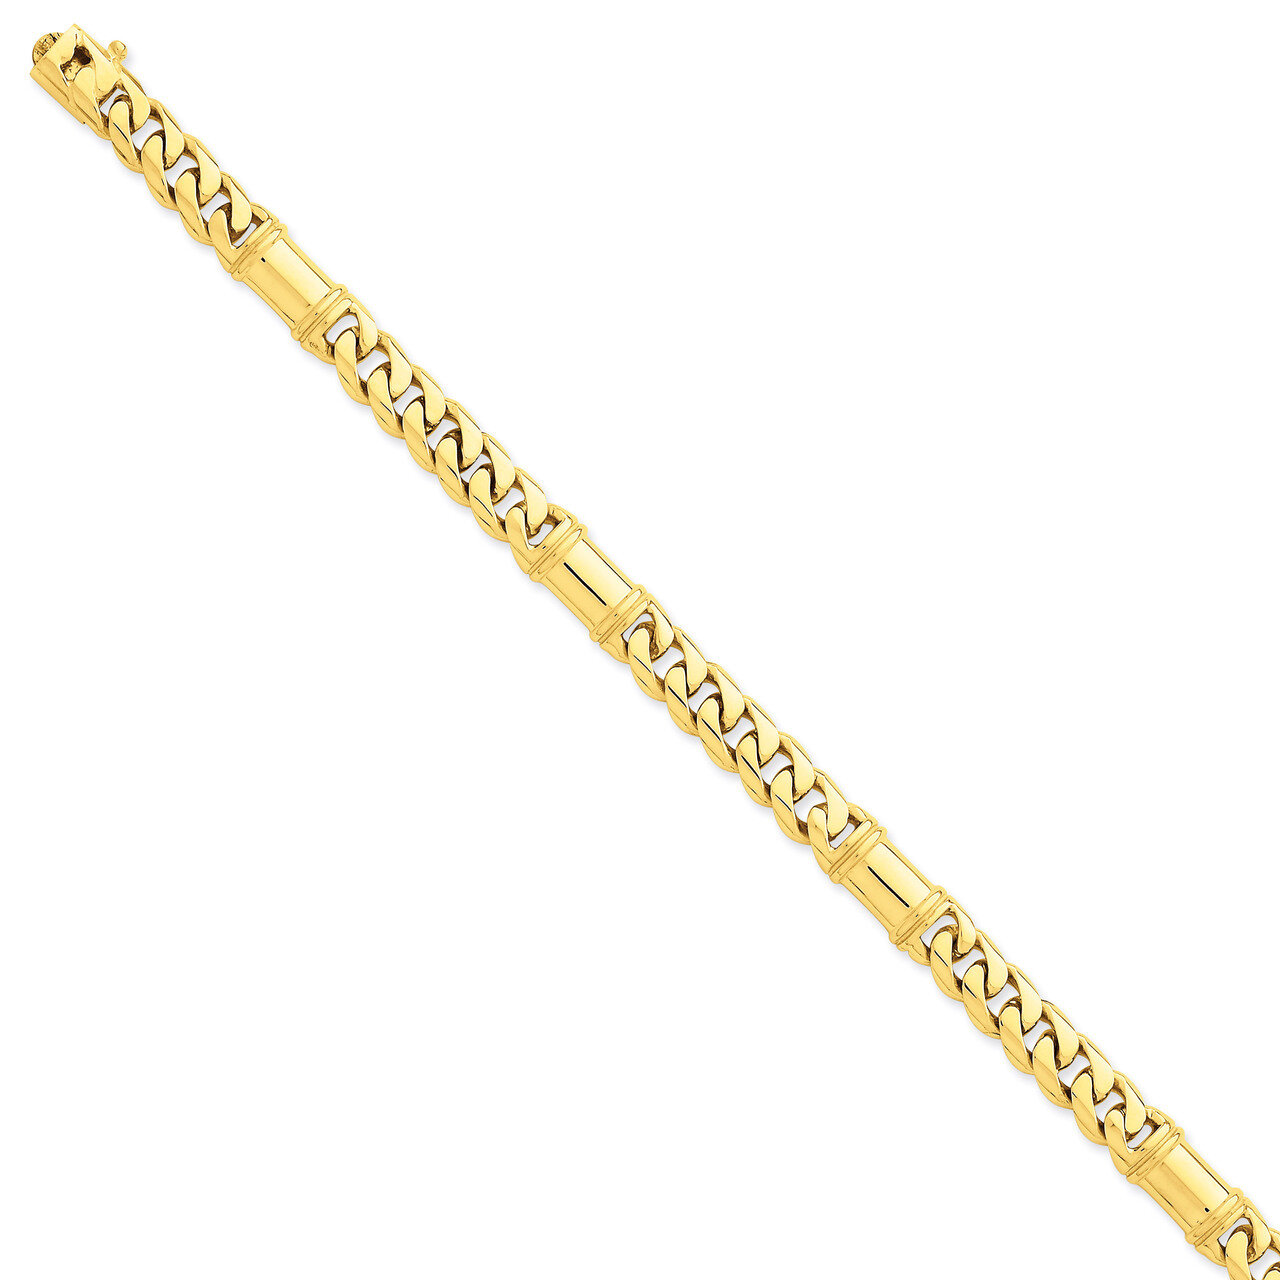 7.5mm Hand-Polished Fancy Link Chain 9 Inch 14k Gold LK187-9